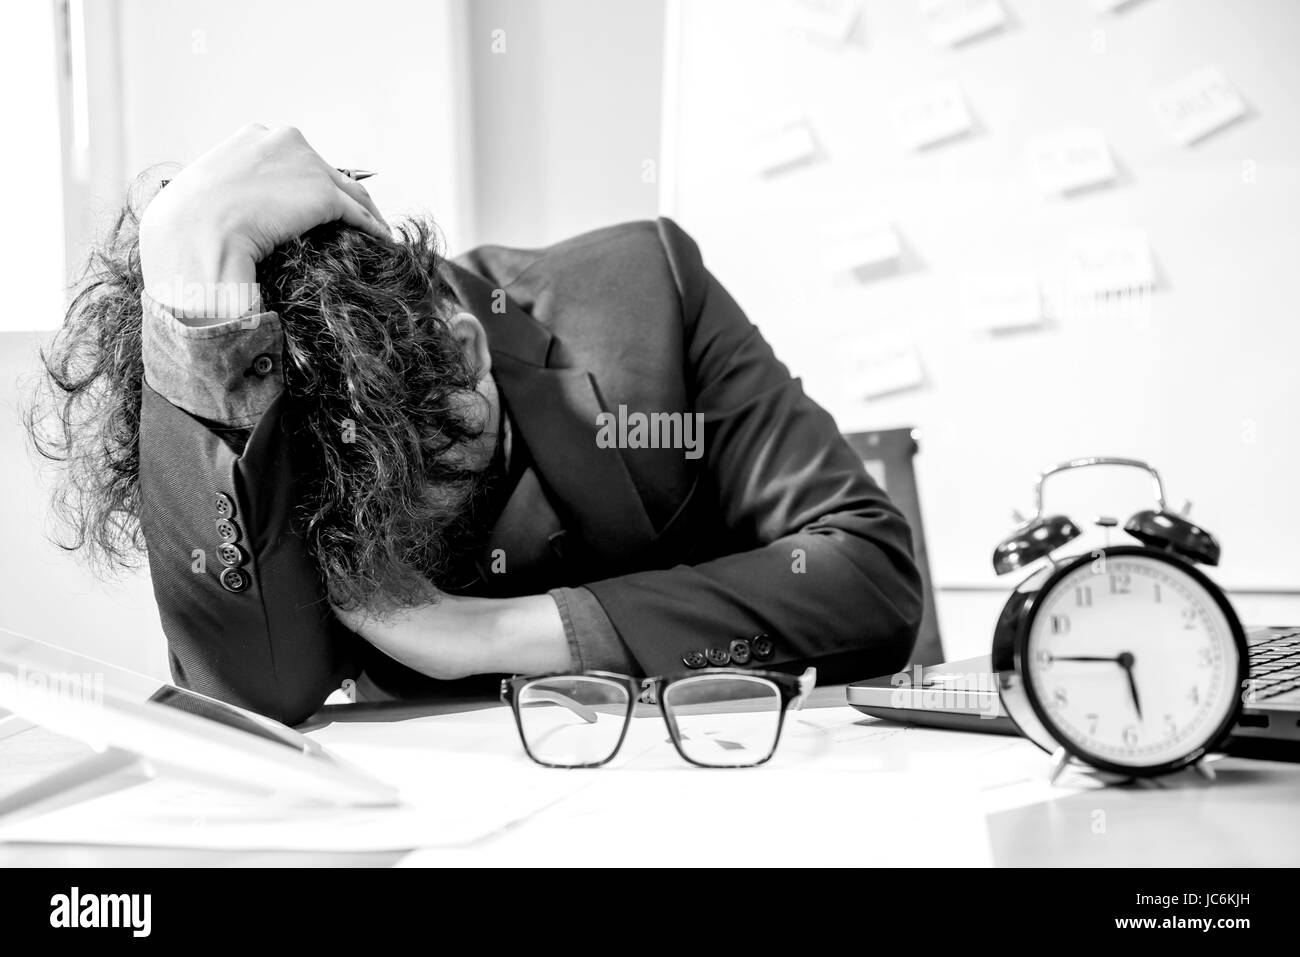 busy and headache person, unsuccessful businessman Stock Photo